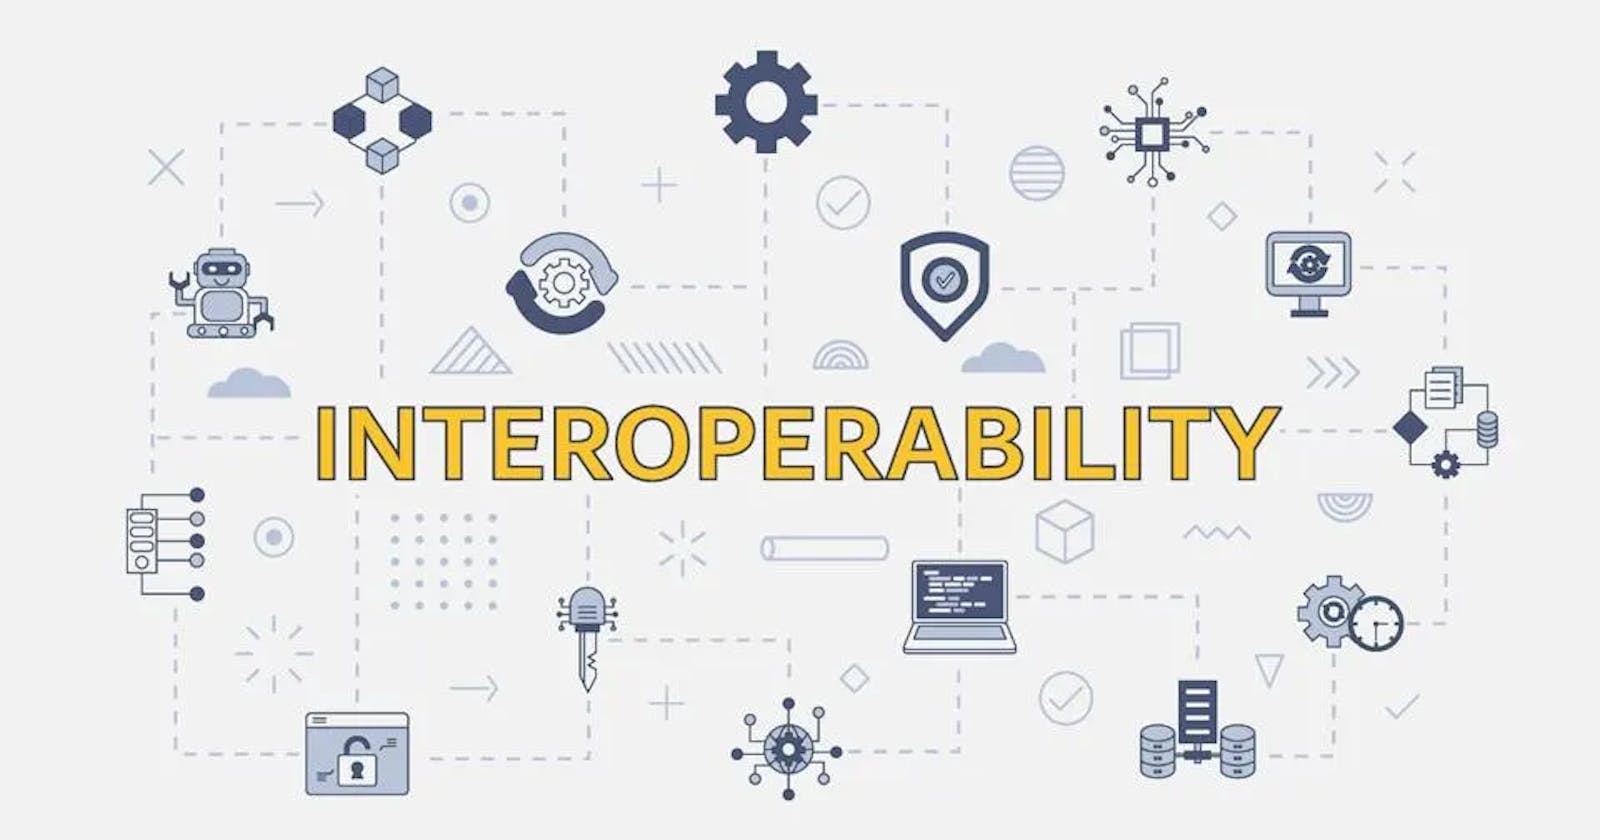 Web3 interoperability and blockchain networks